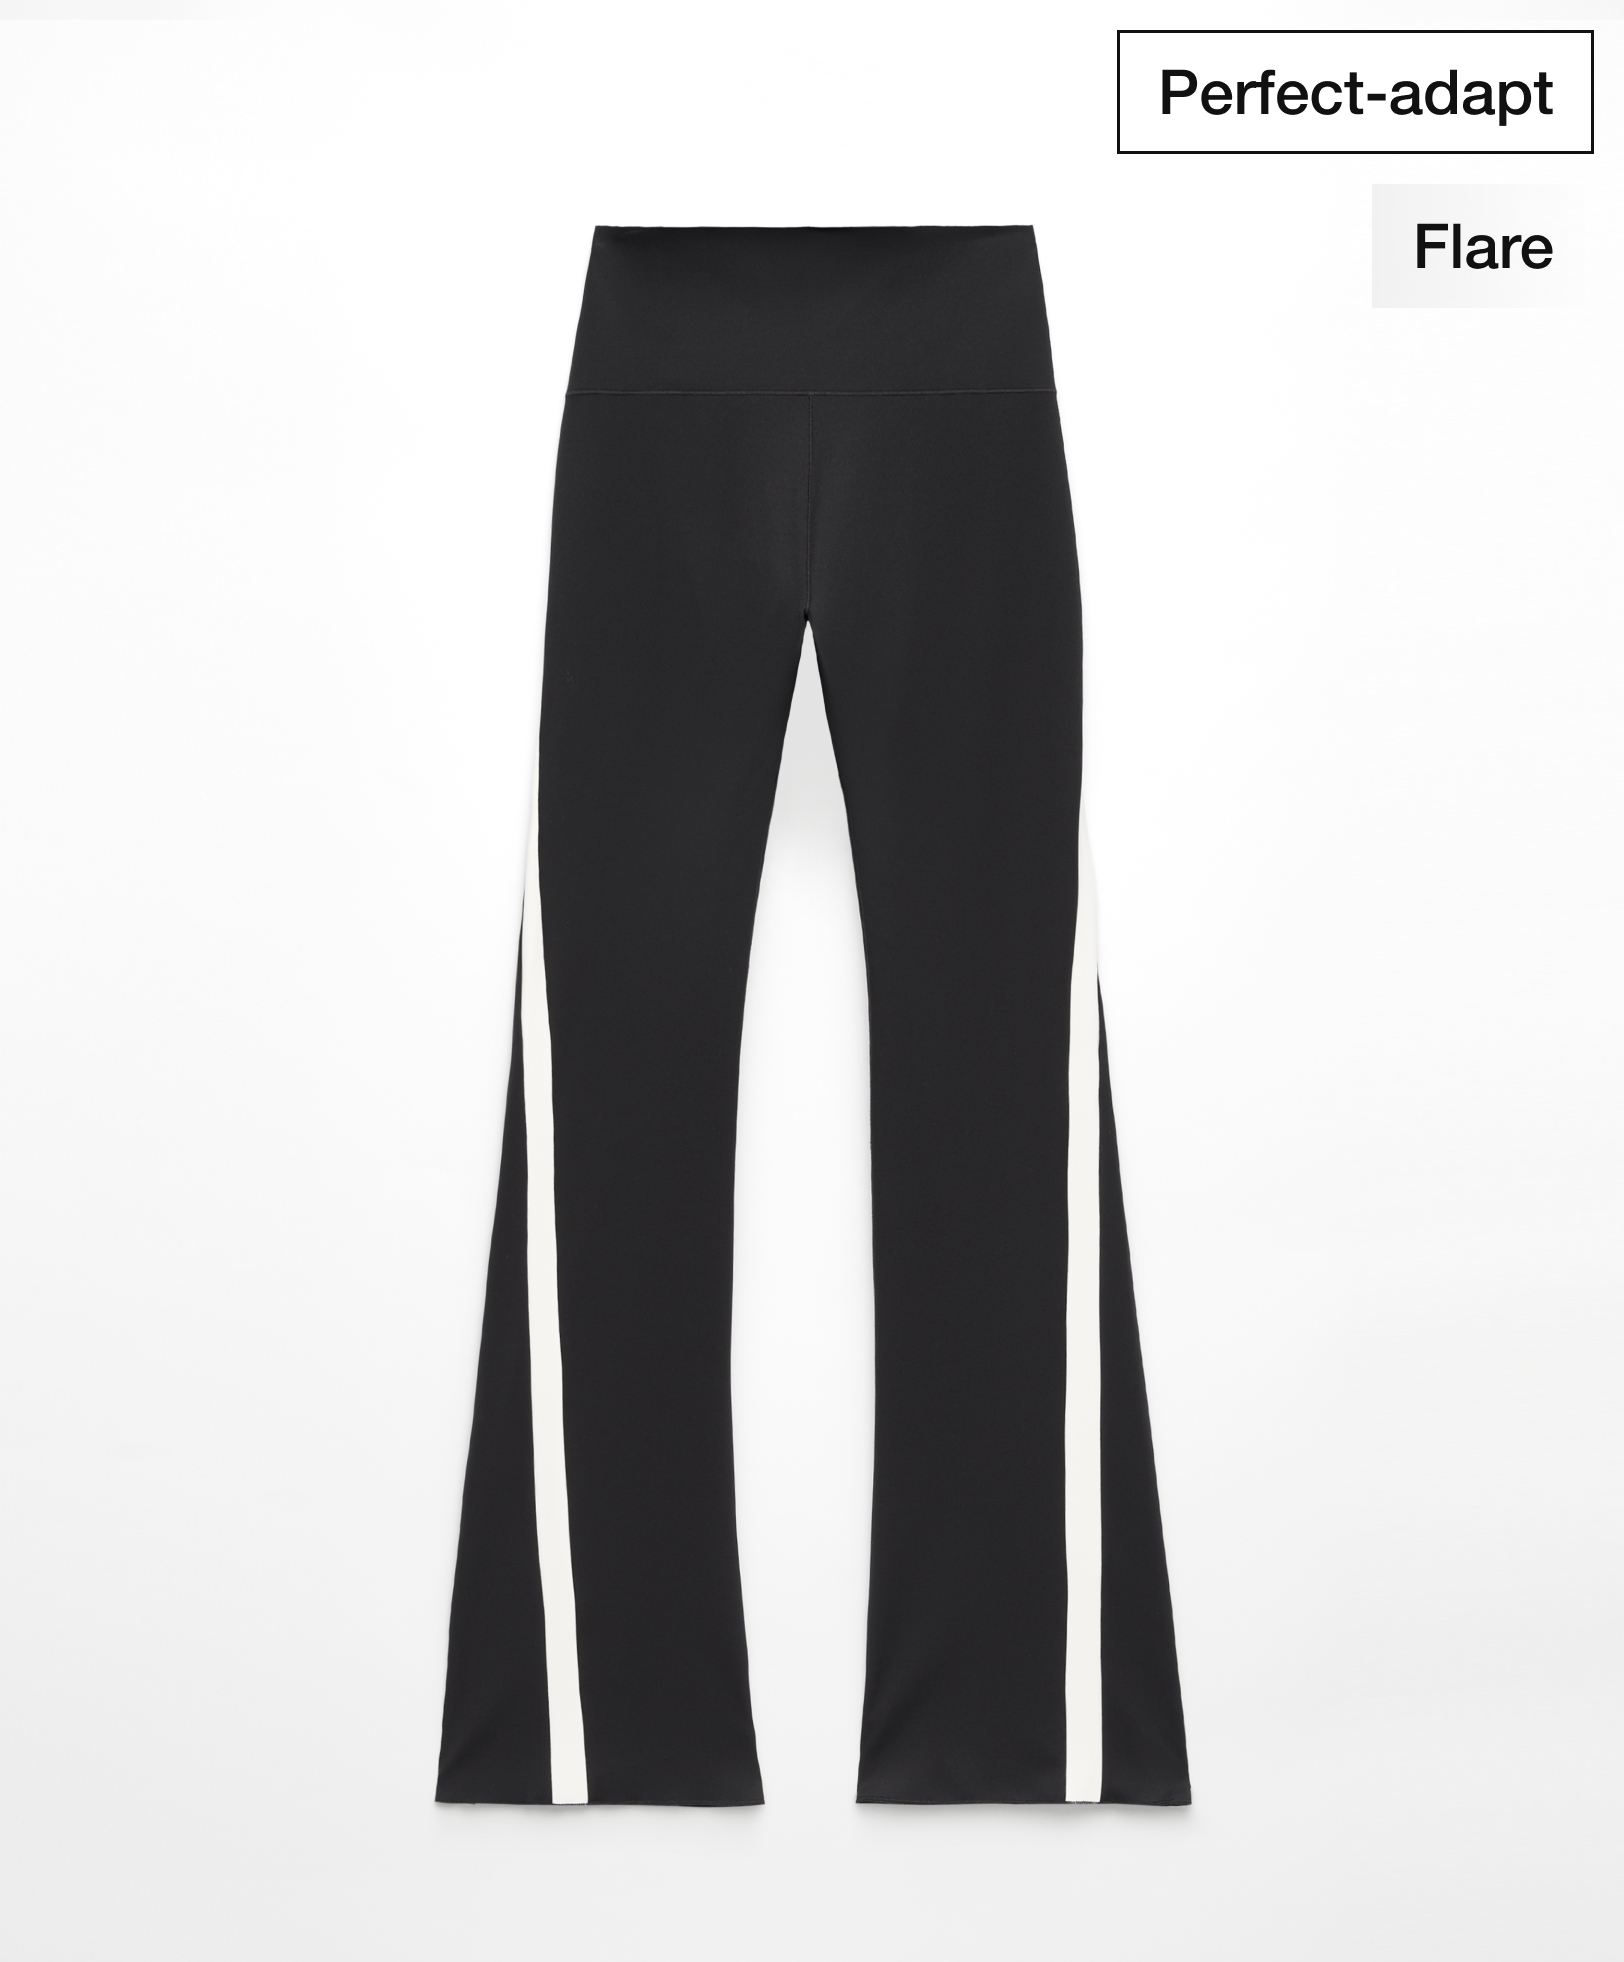 Pantalon flare perfect-adapt 80 cm